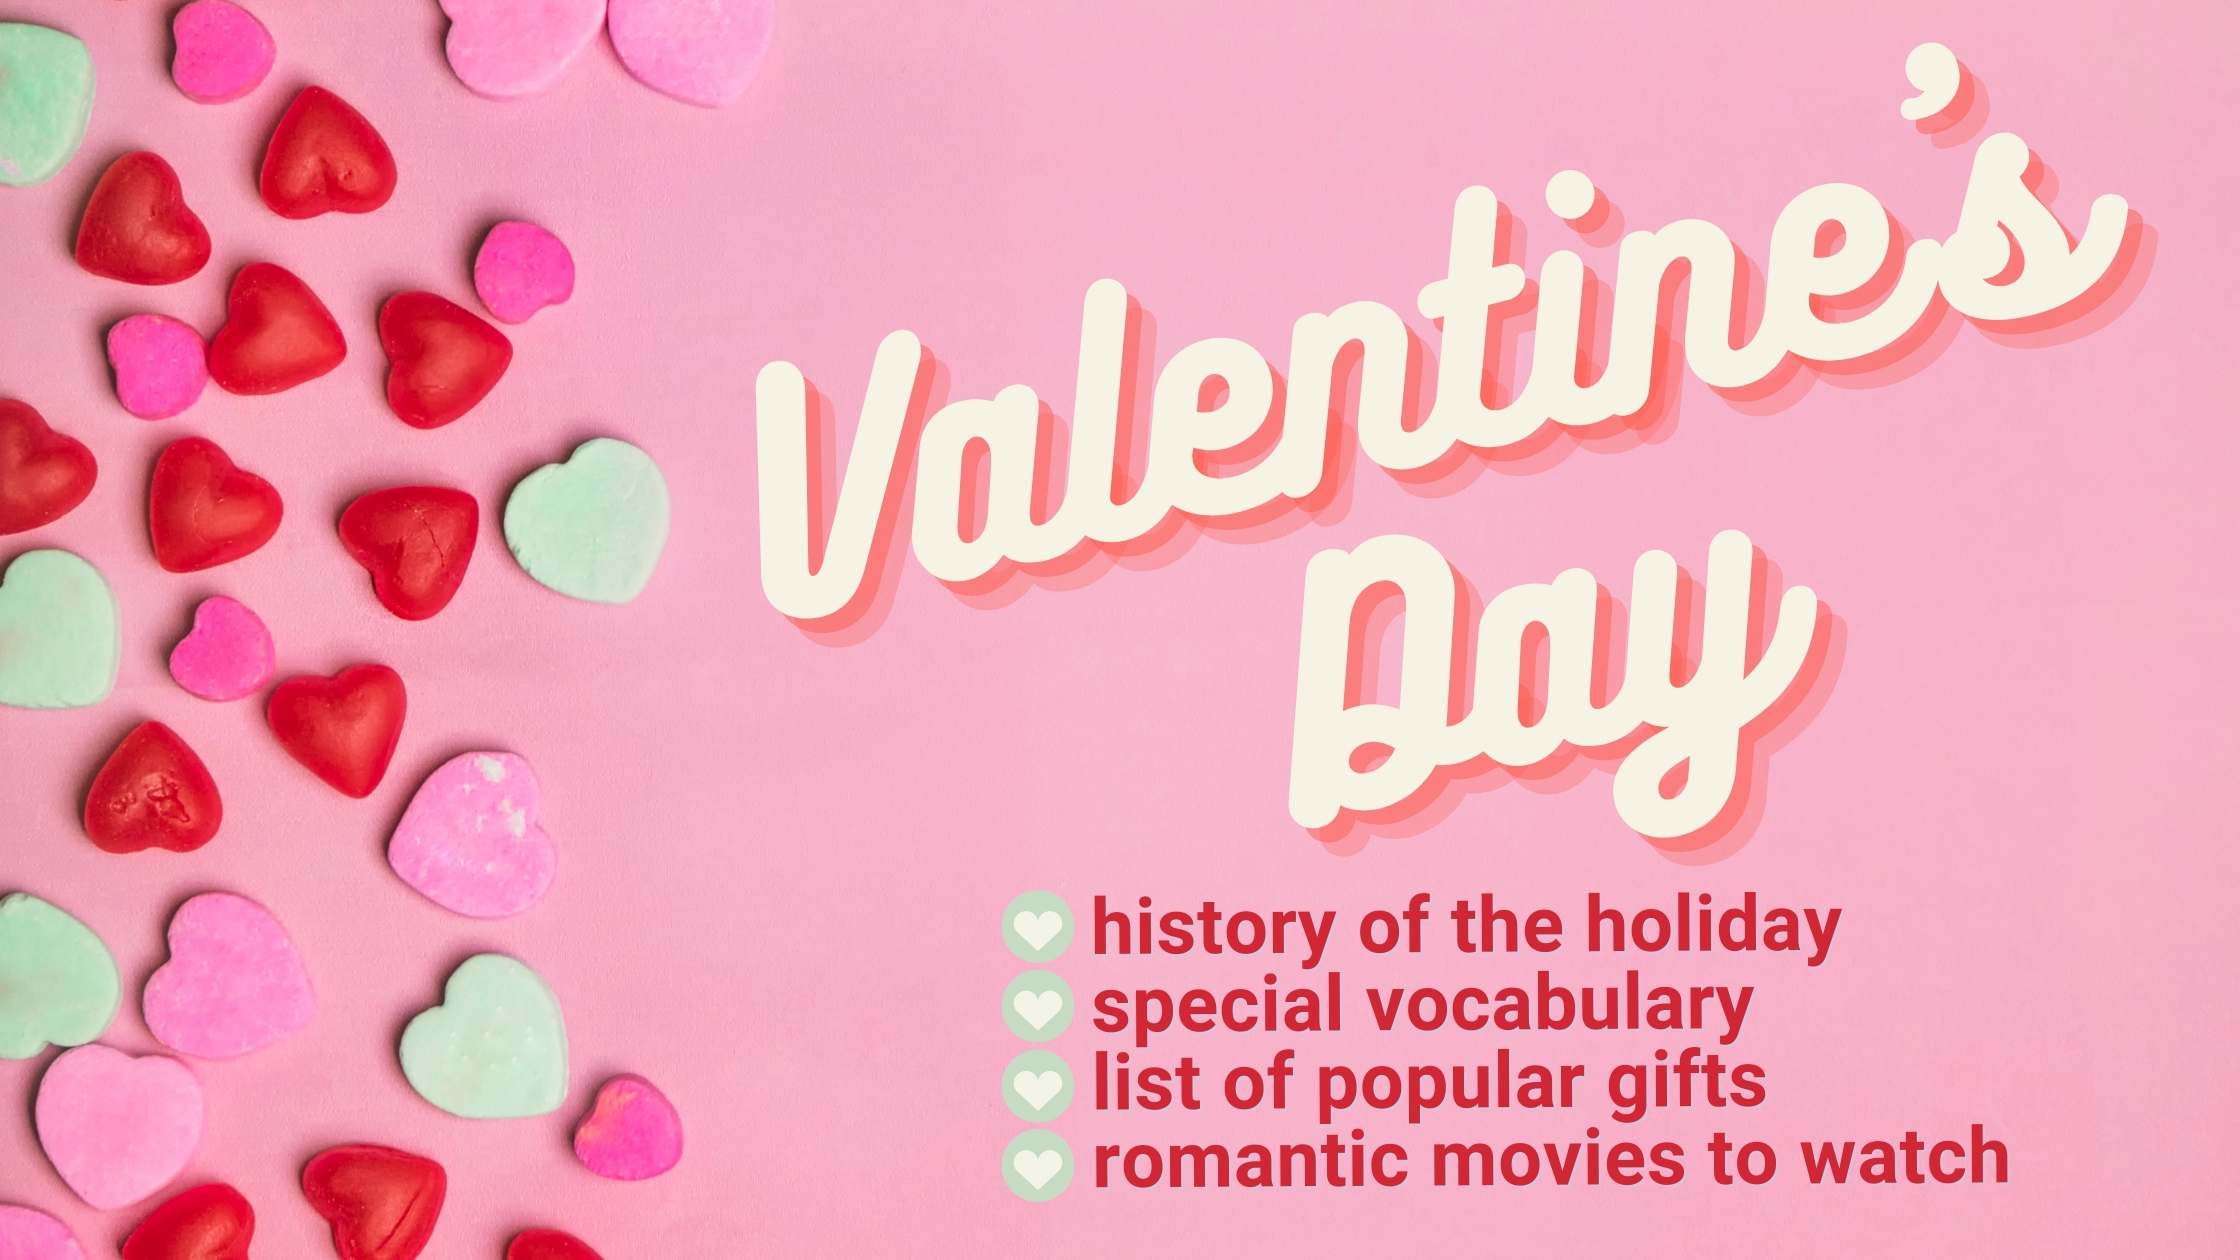 valentine's day in english, valentines day vocabulary in english, valentines day traditions